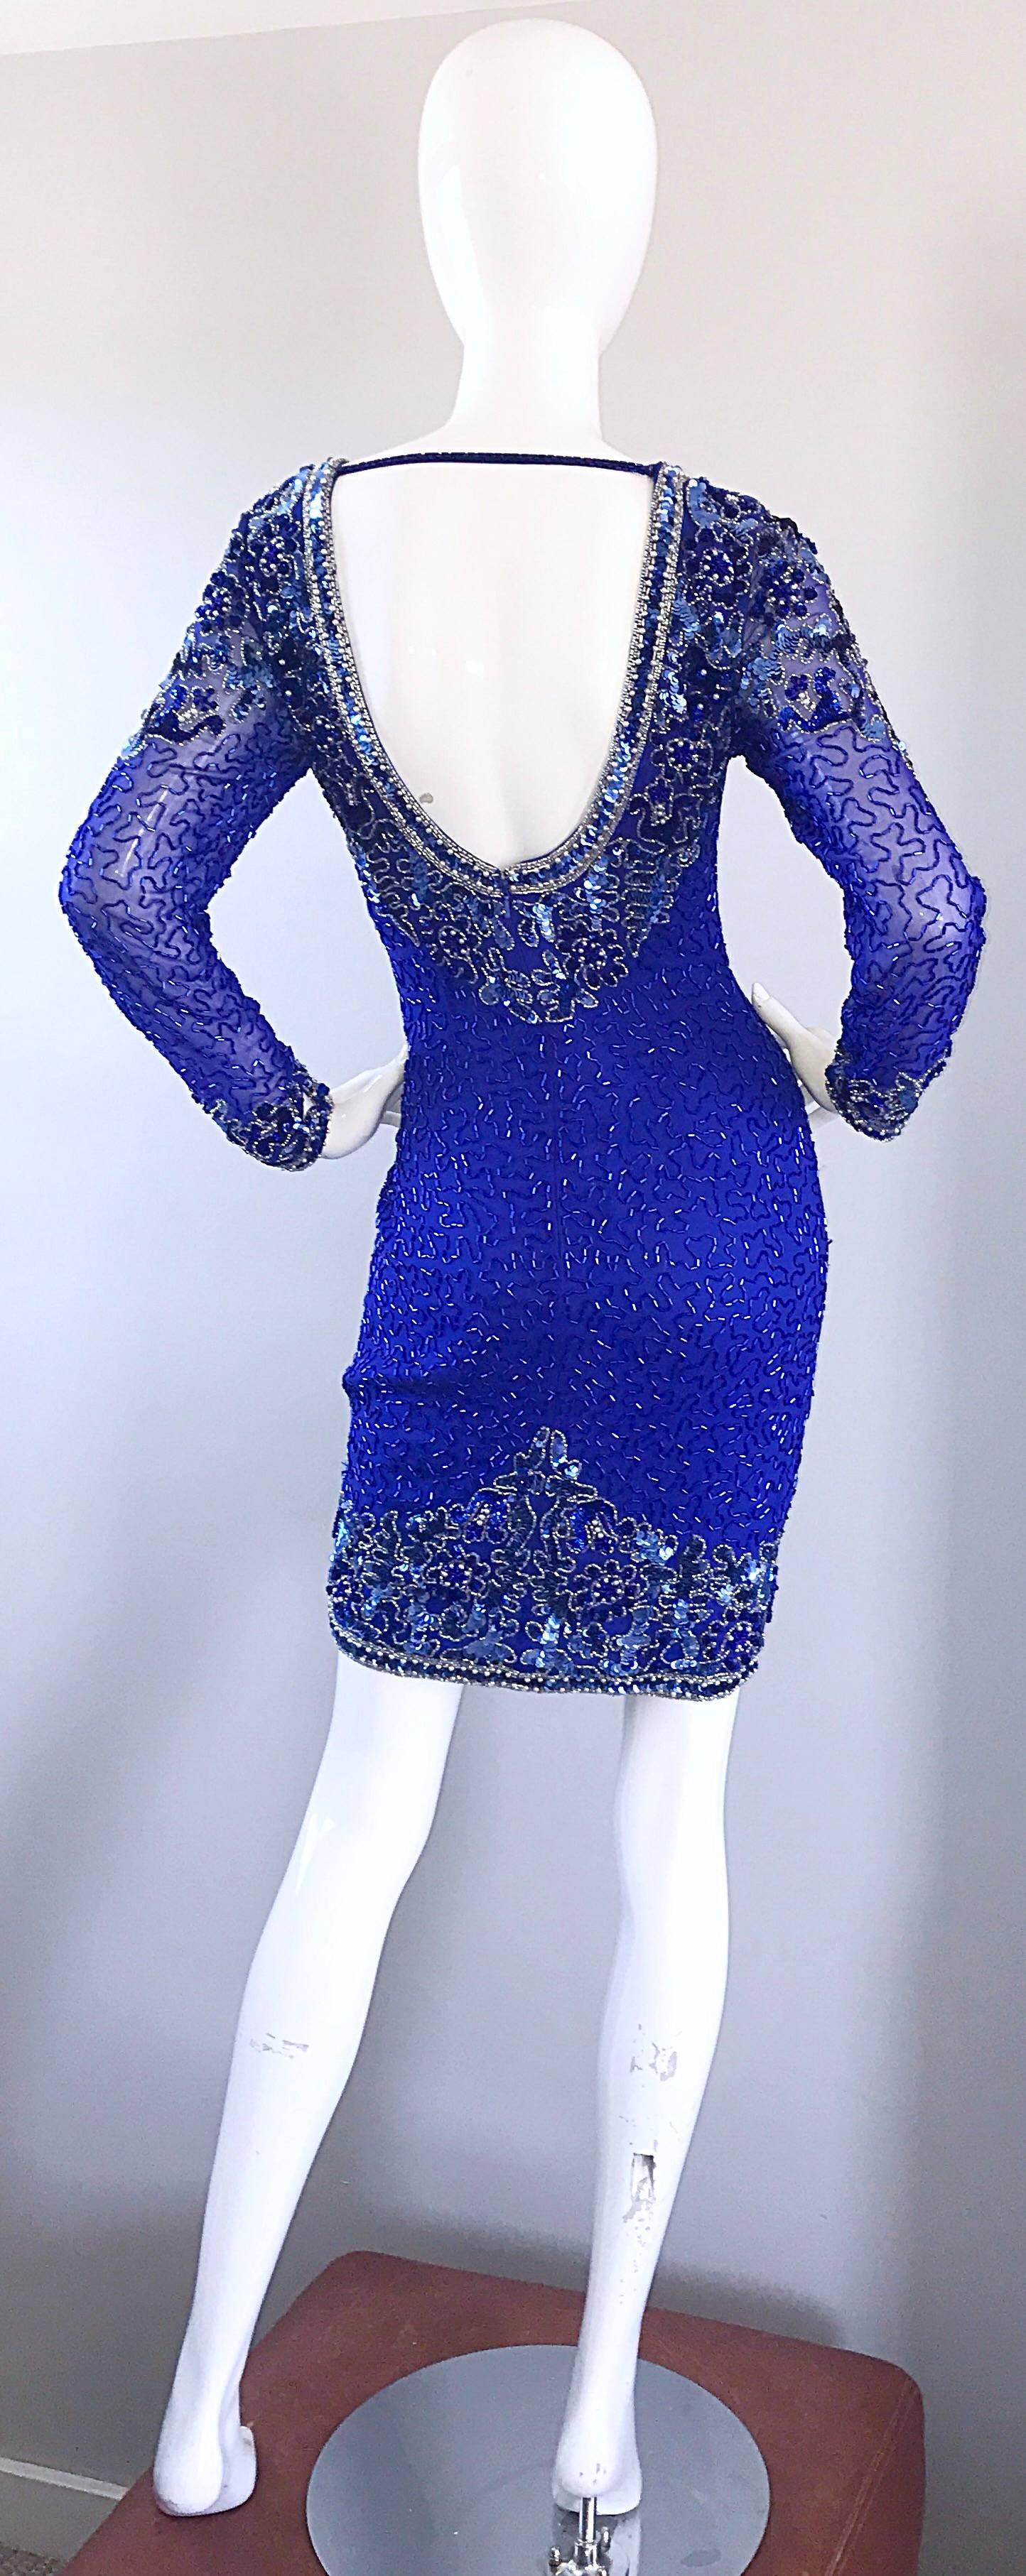 cassini dress in blue